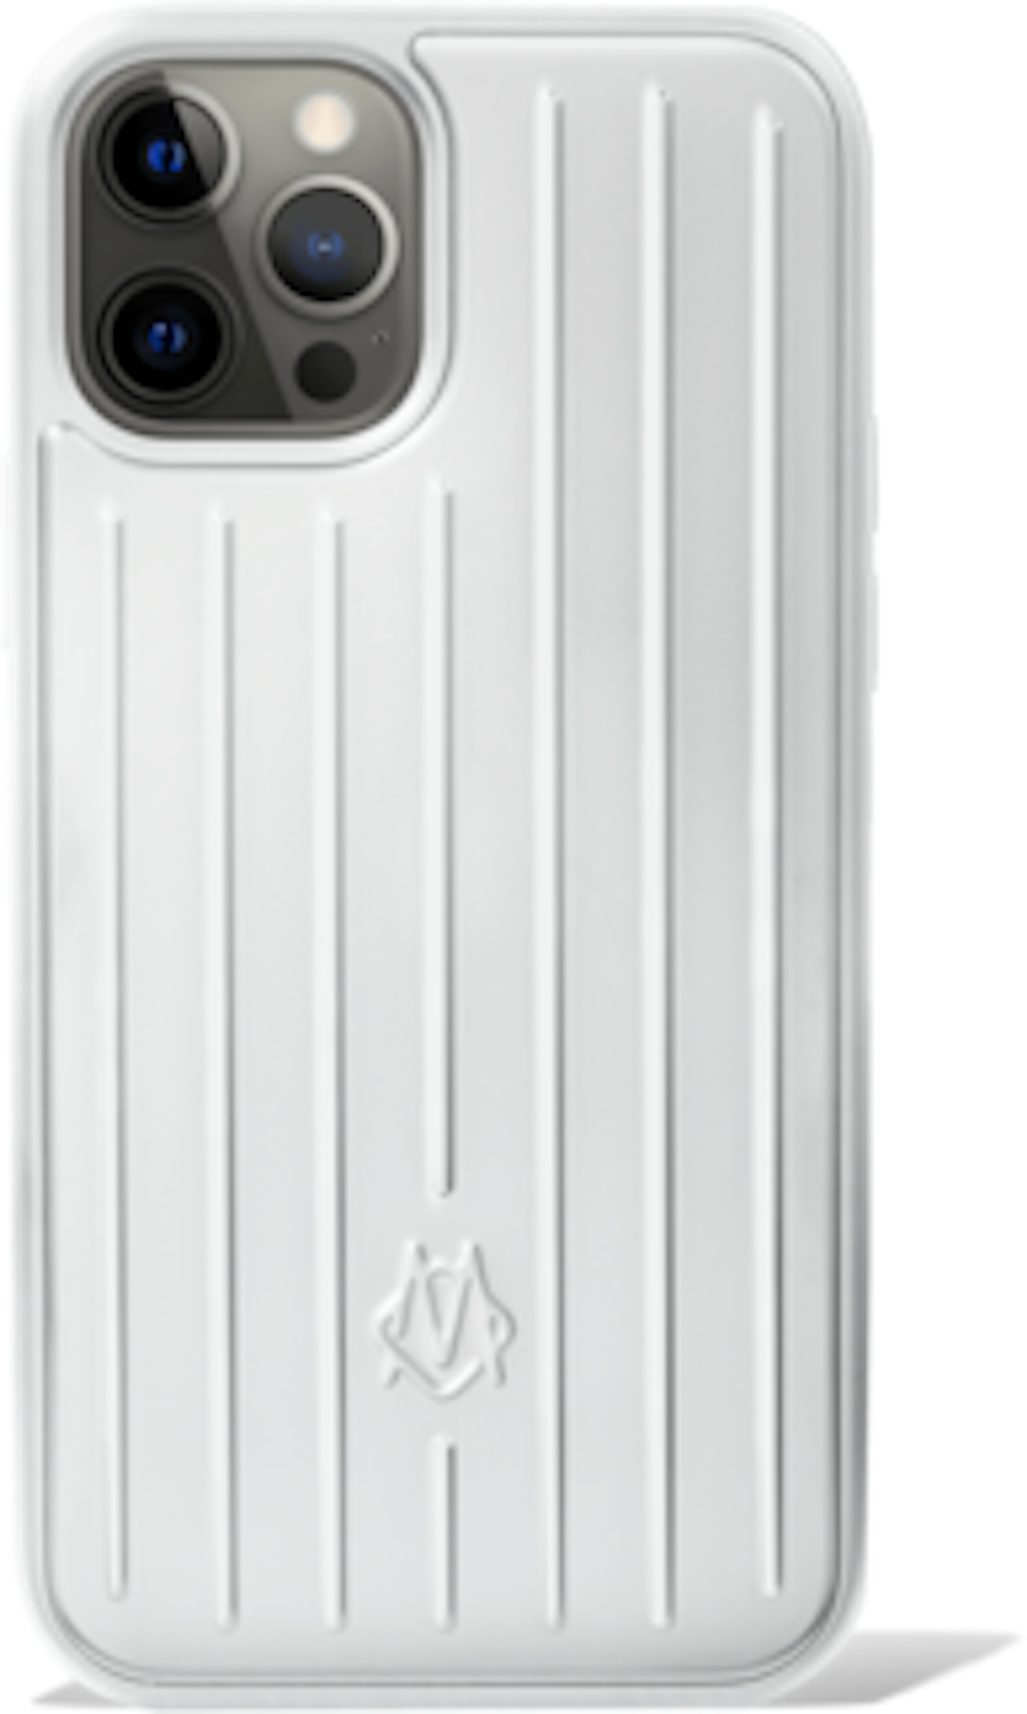 White Supreme & Louis Vuitton Logo iPhone 12 Pro Max Case